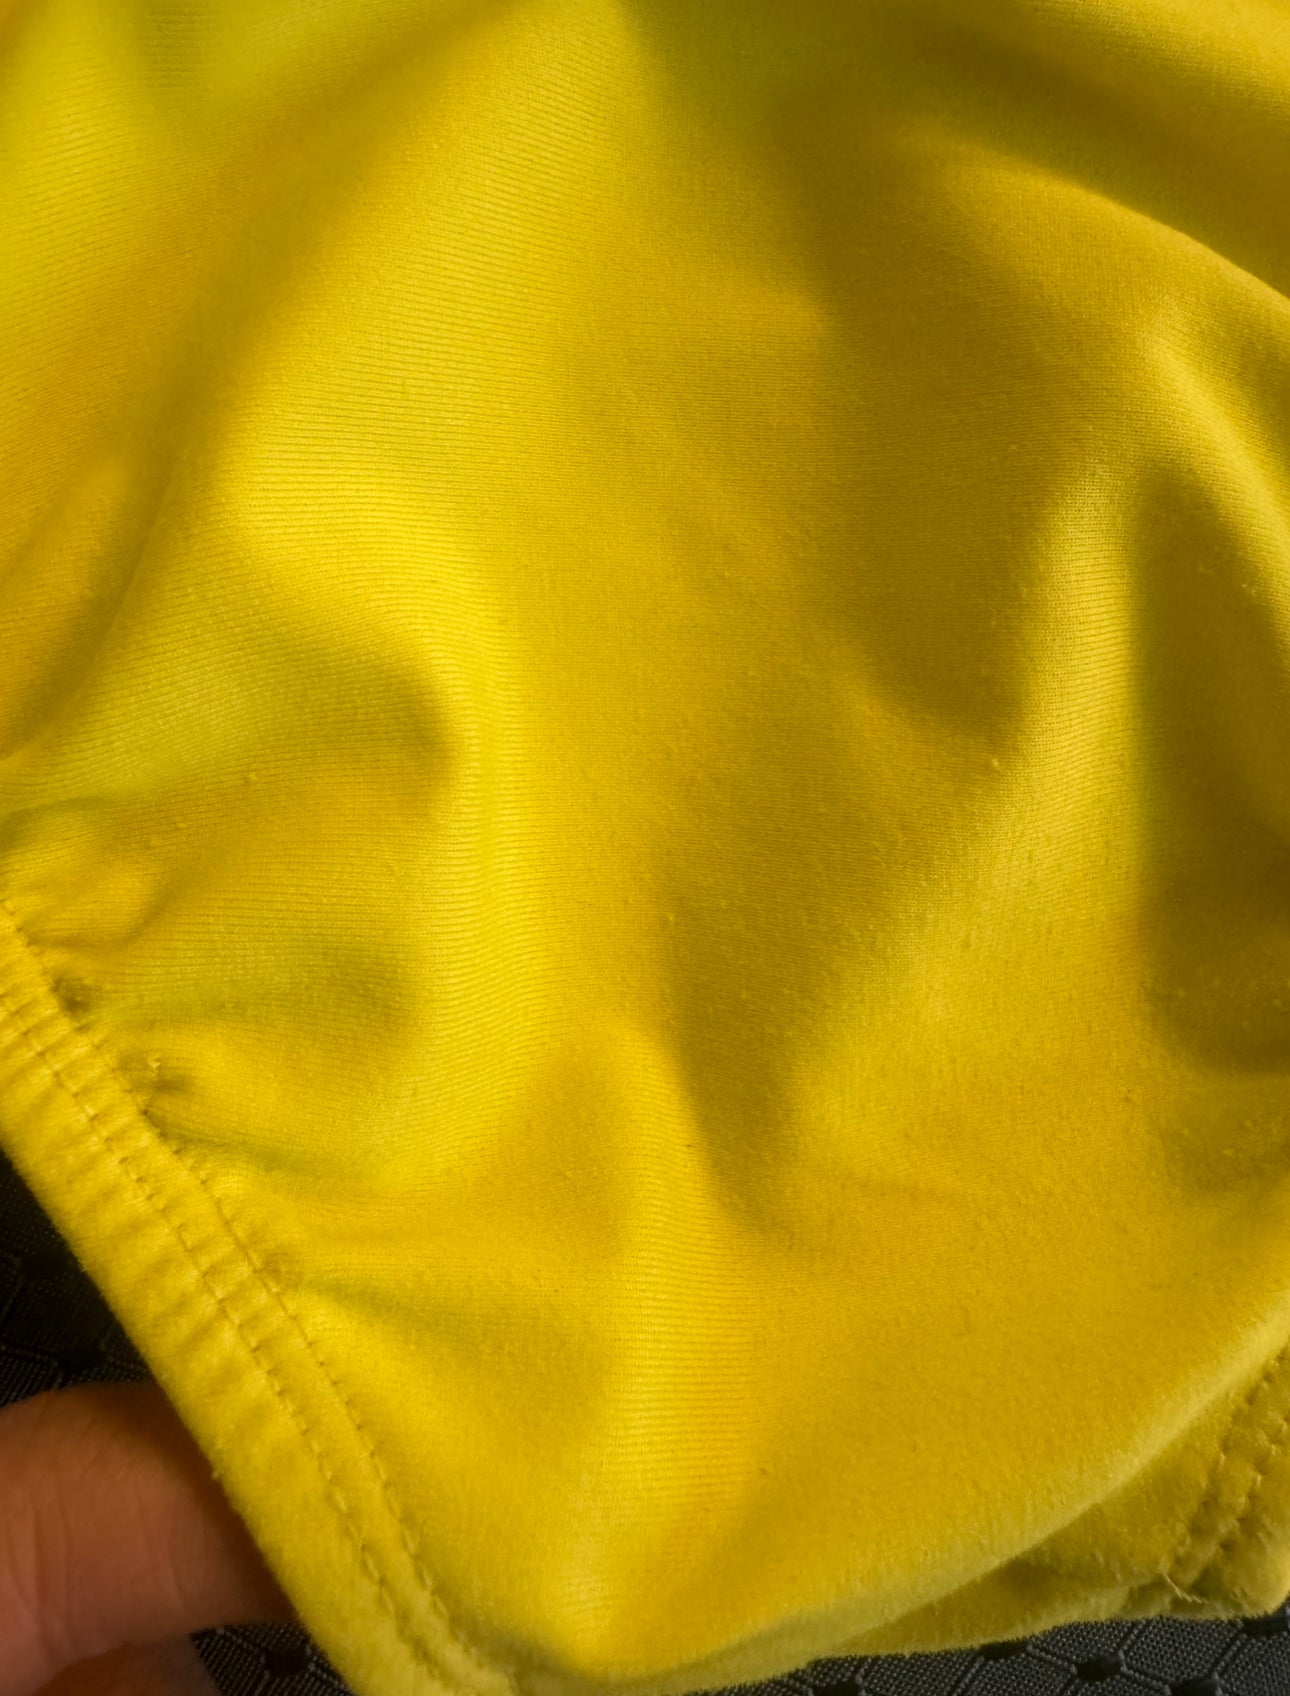 Gap Yellow Bikini 2T VVGUC- very minimal pilling like hardly noticeable.